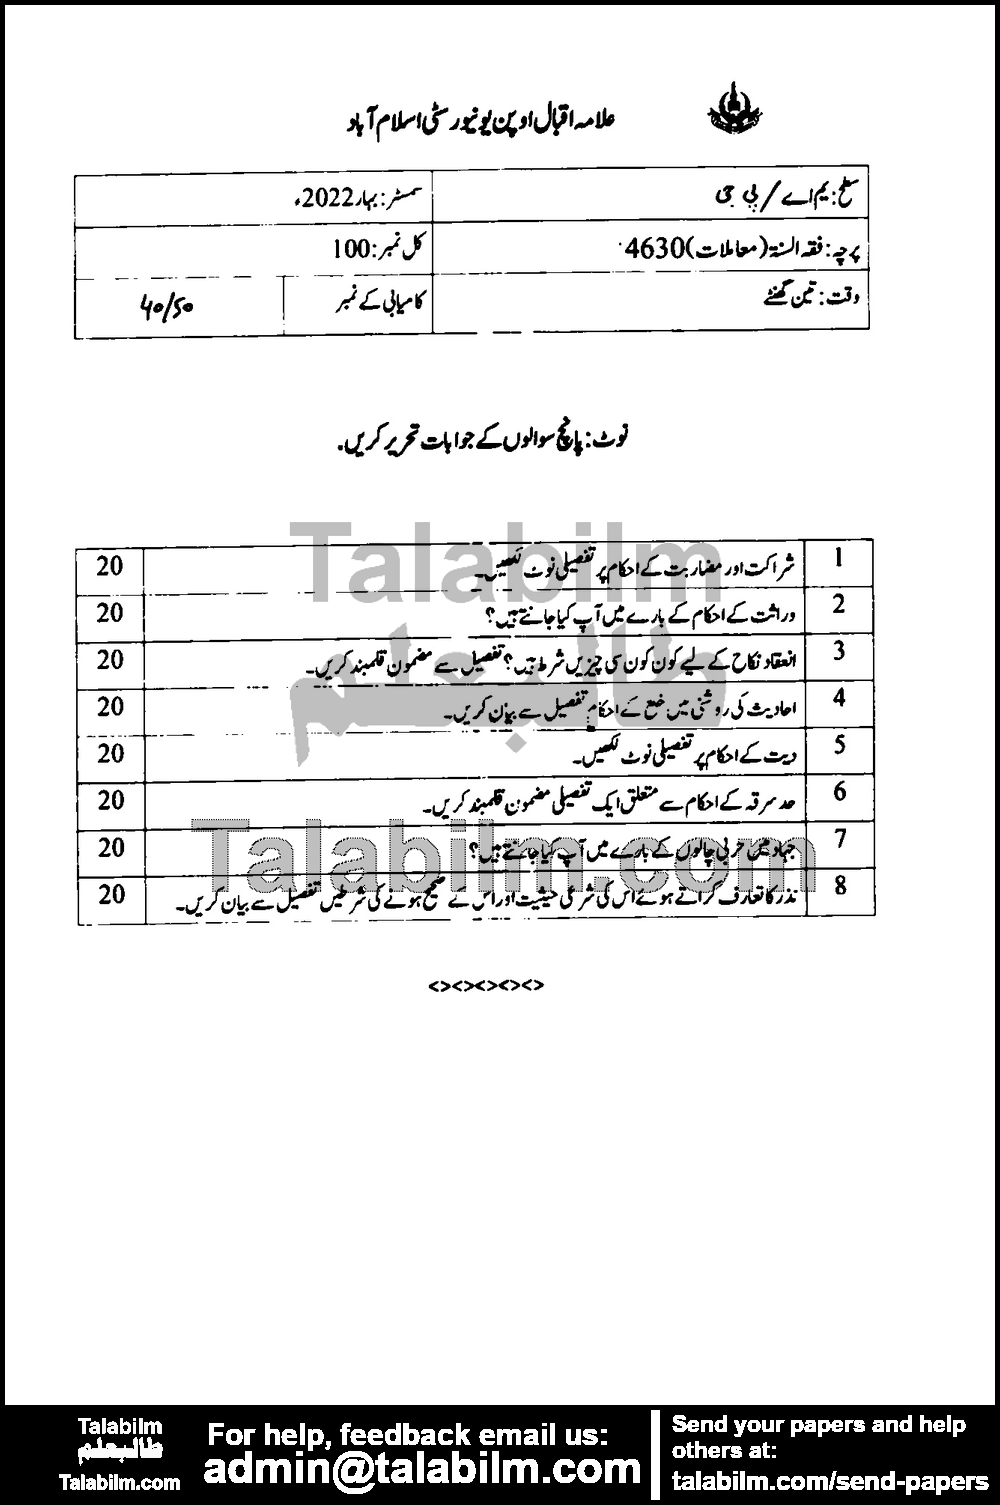 Fiqa-ul-Sunnah (Muamilat) 4630 past paper for Spring 2022